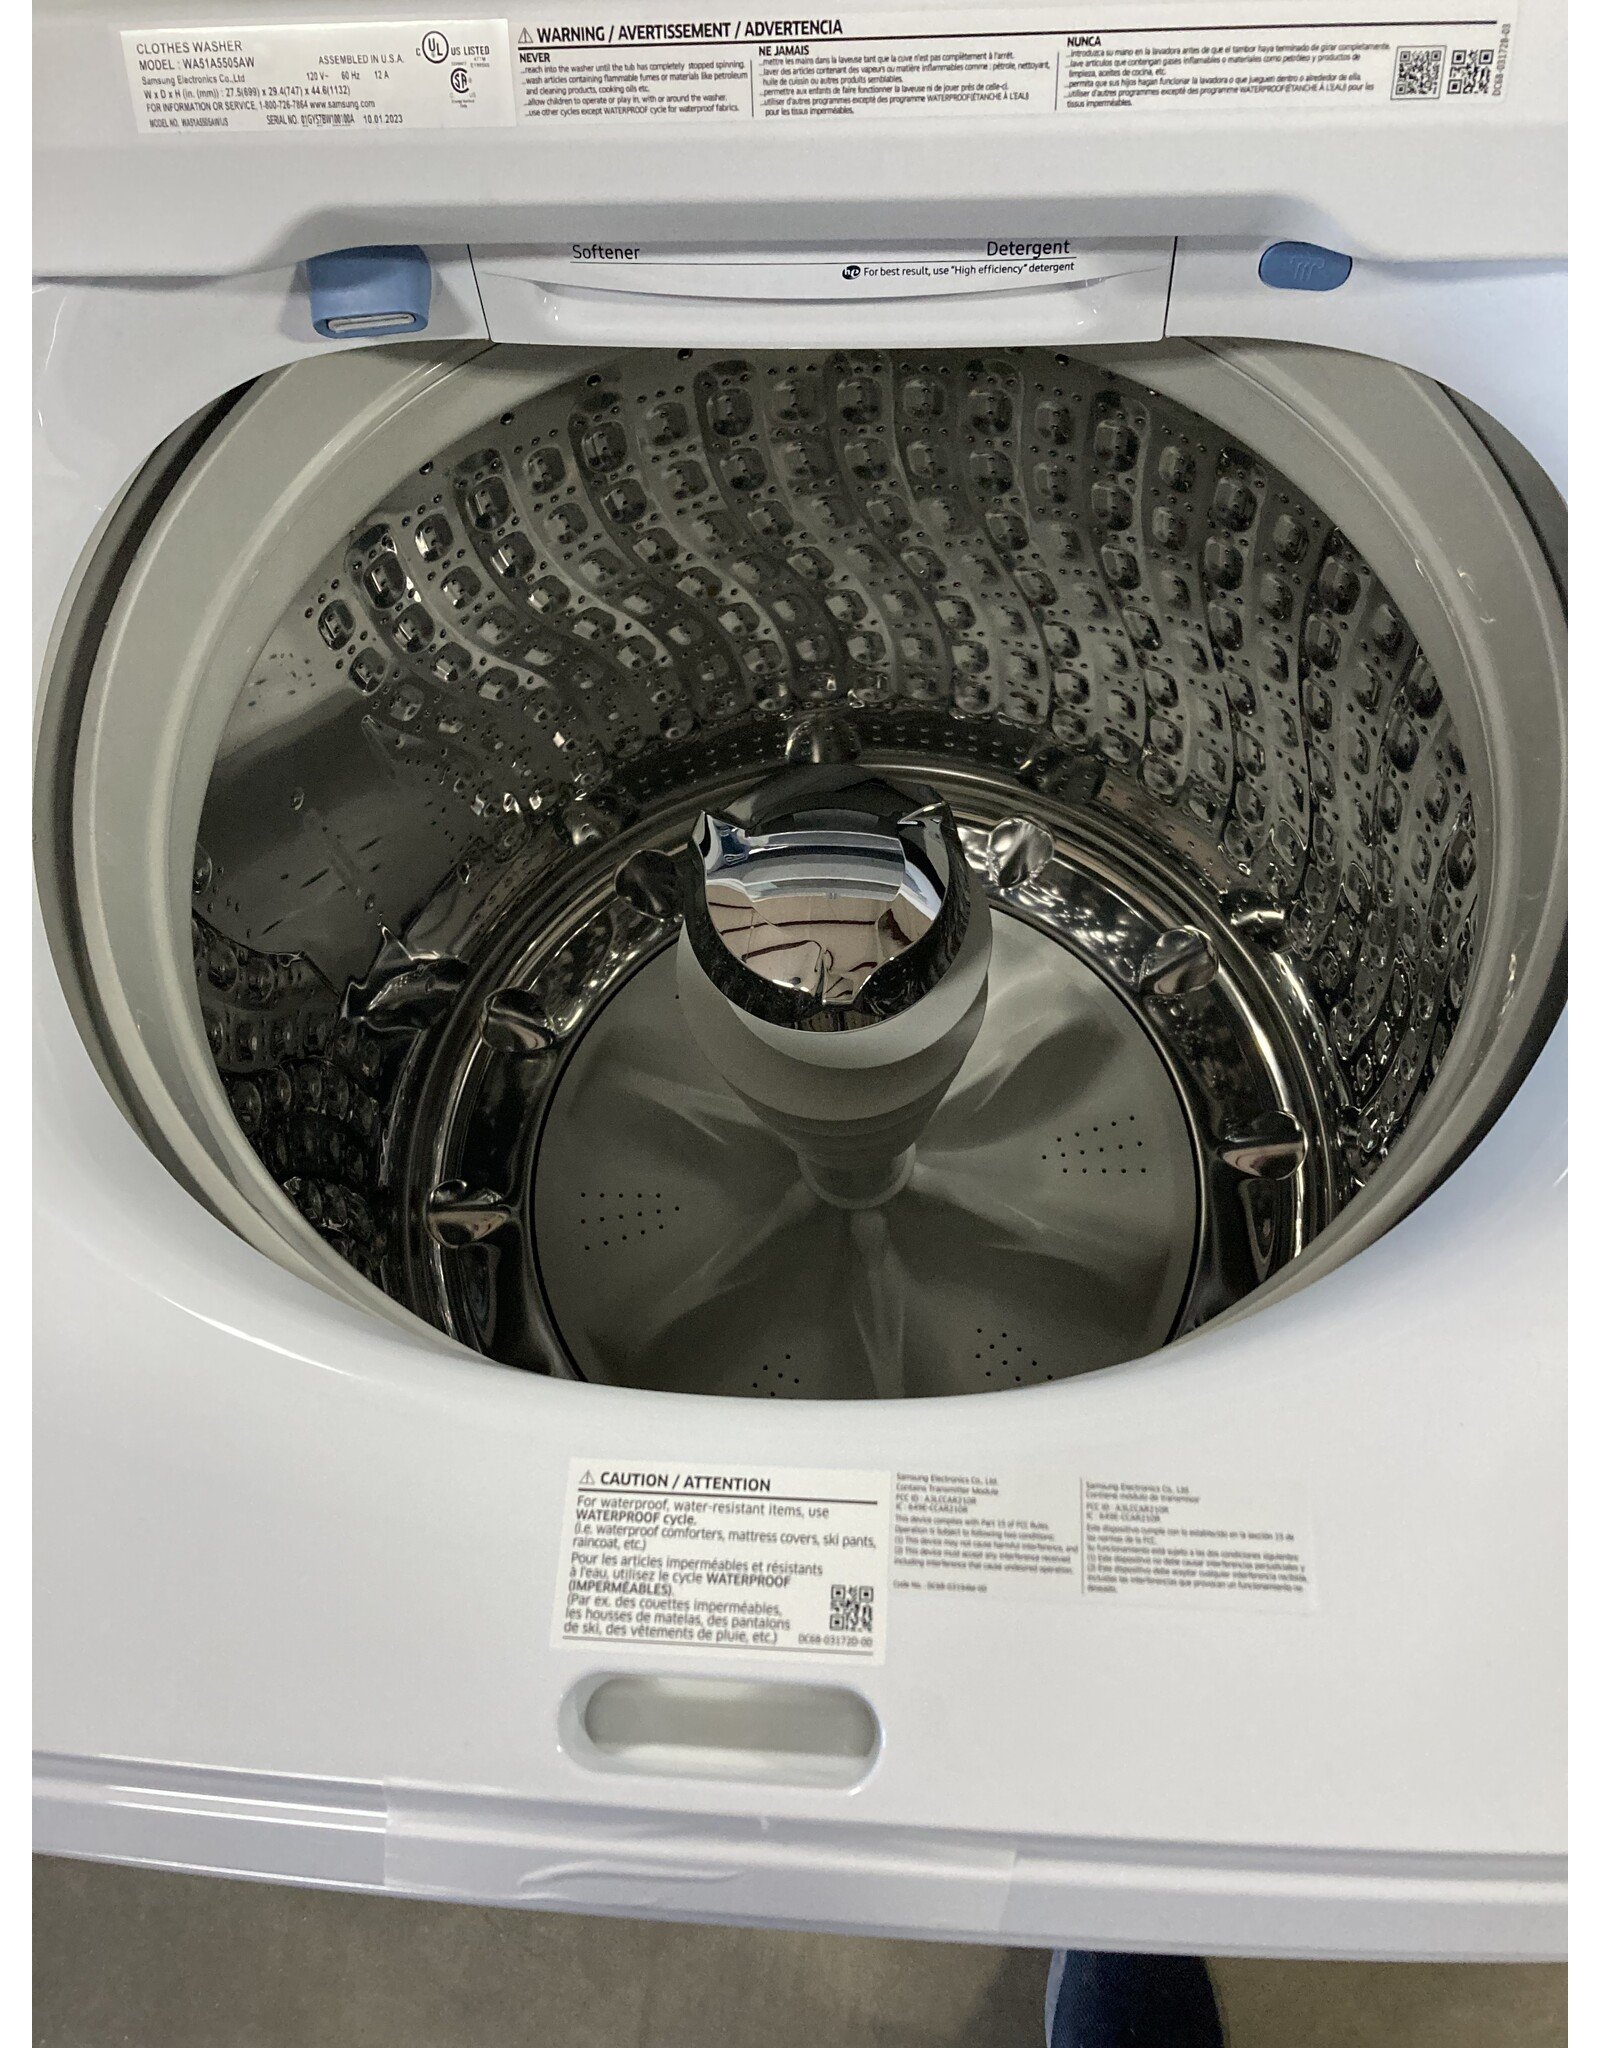 Climatic Samsung WA51A5505AW Topload Washing Machine New